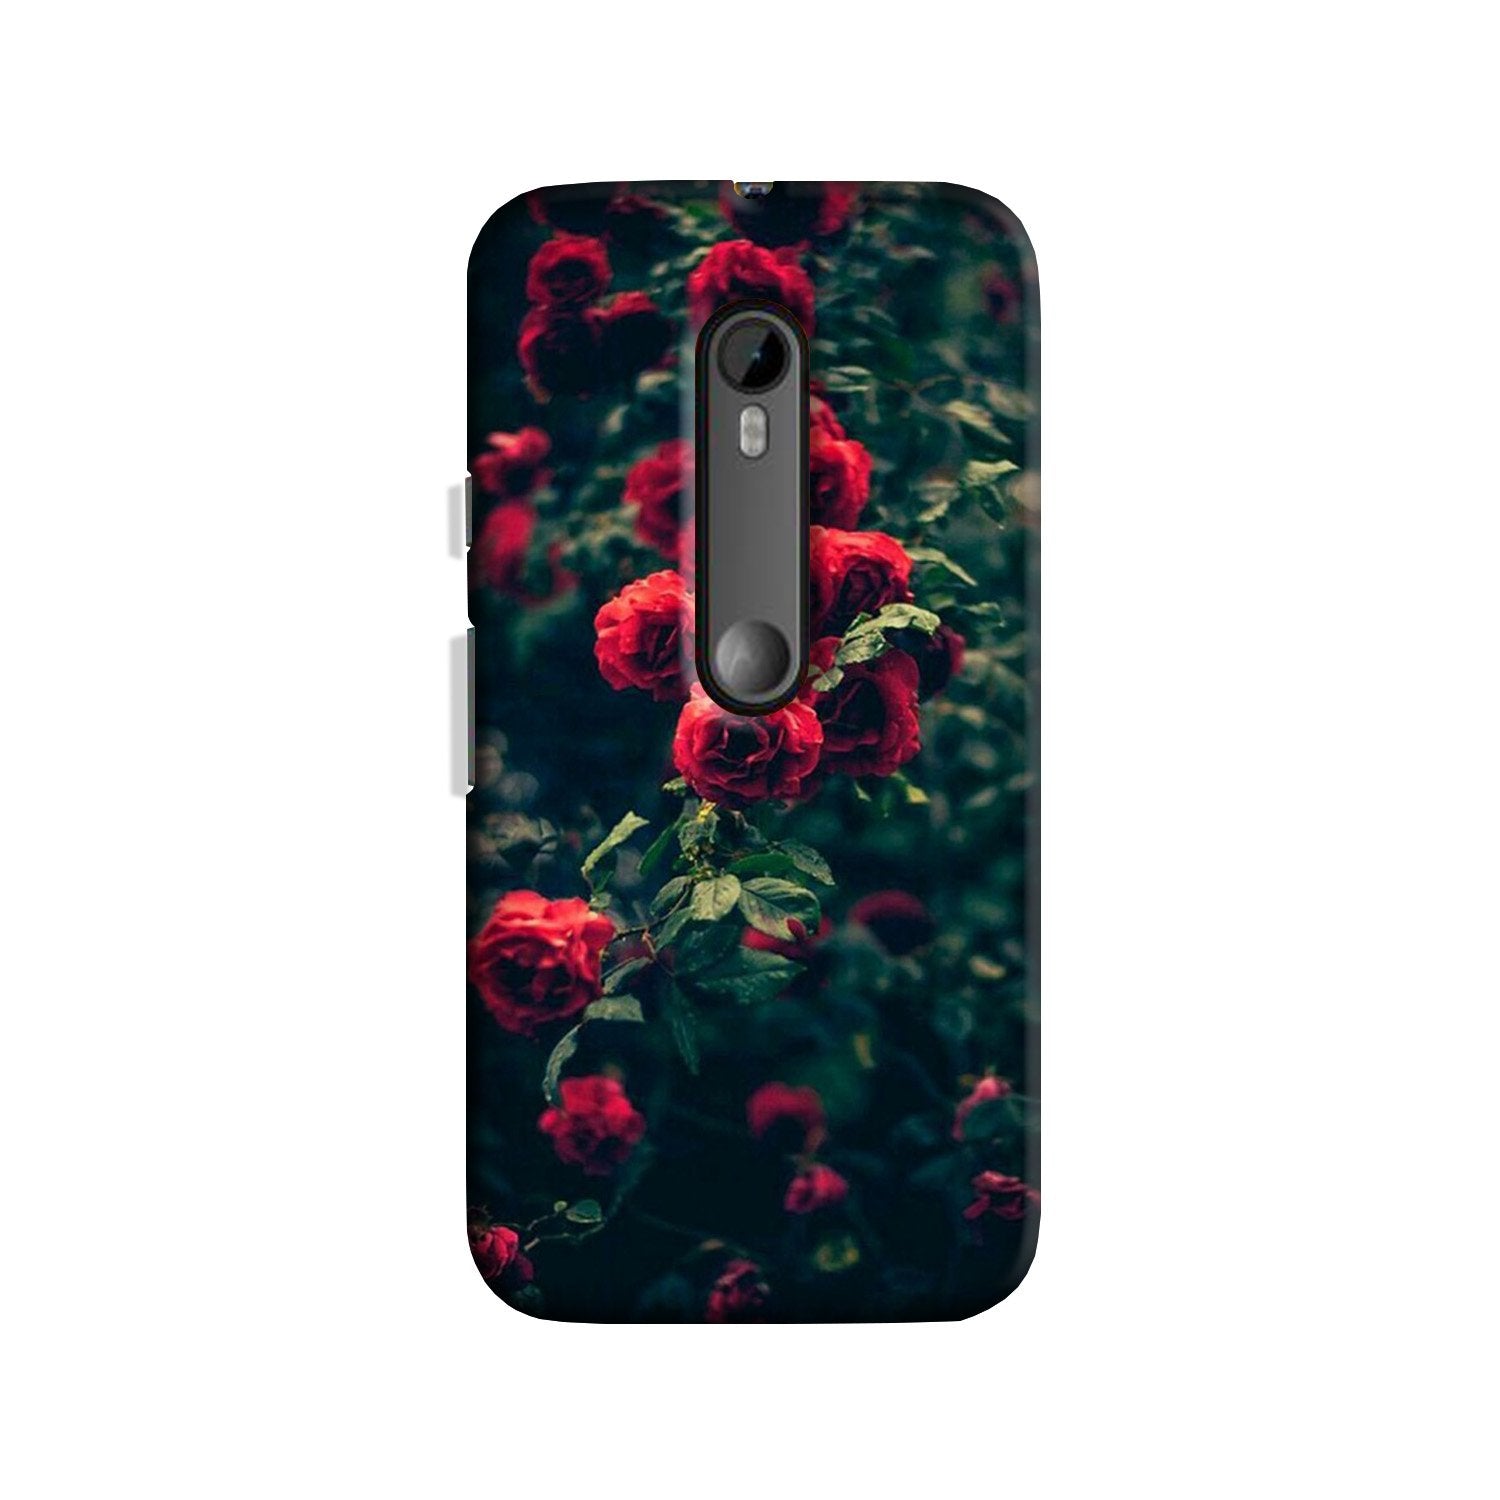 Red Rose Case for Moto G3